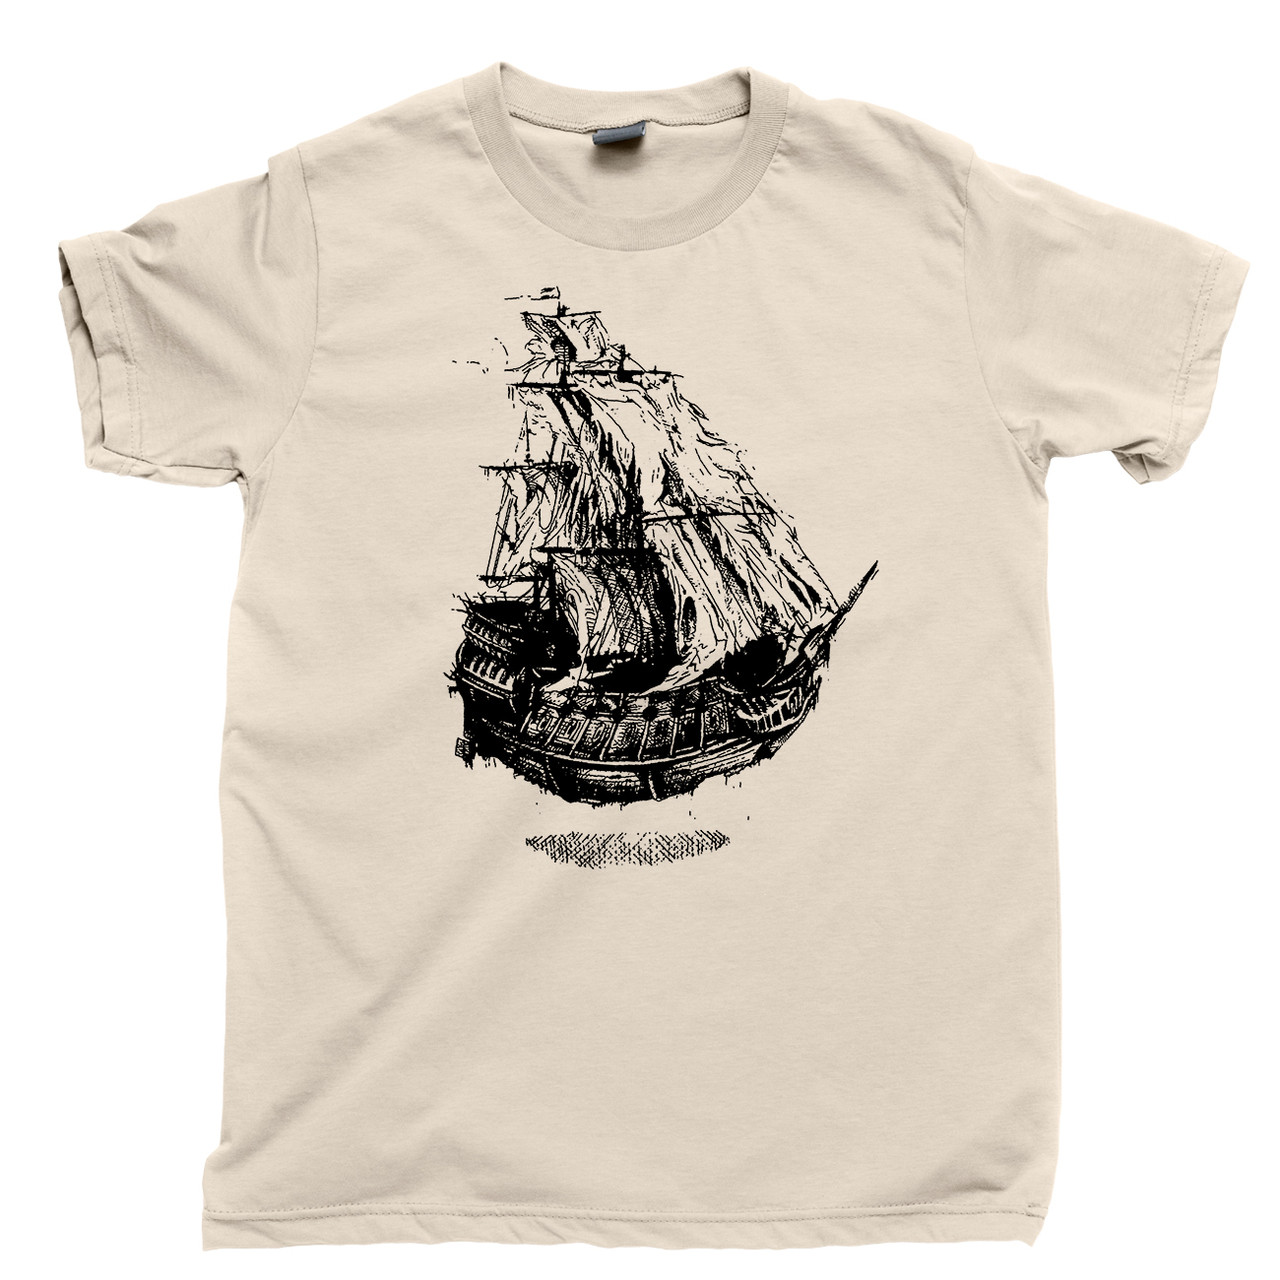 Flying Dutchman's Ship T Shirt - Davy Jones Locker, Shipwreck, Pirate ...